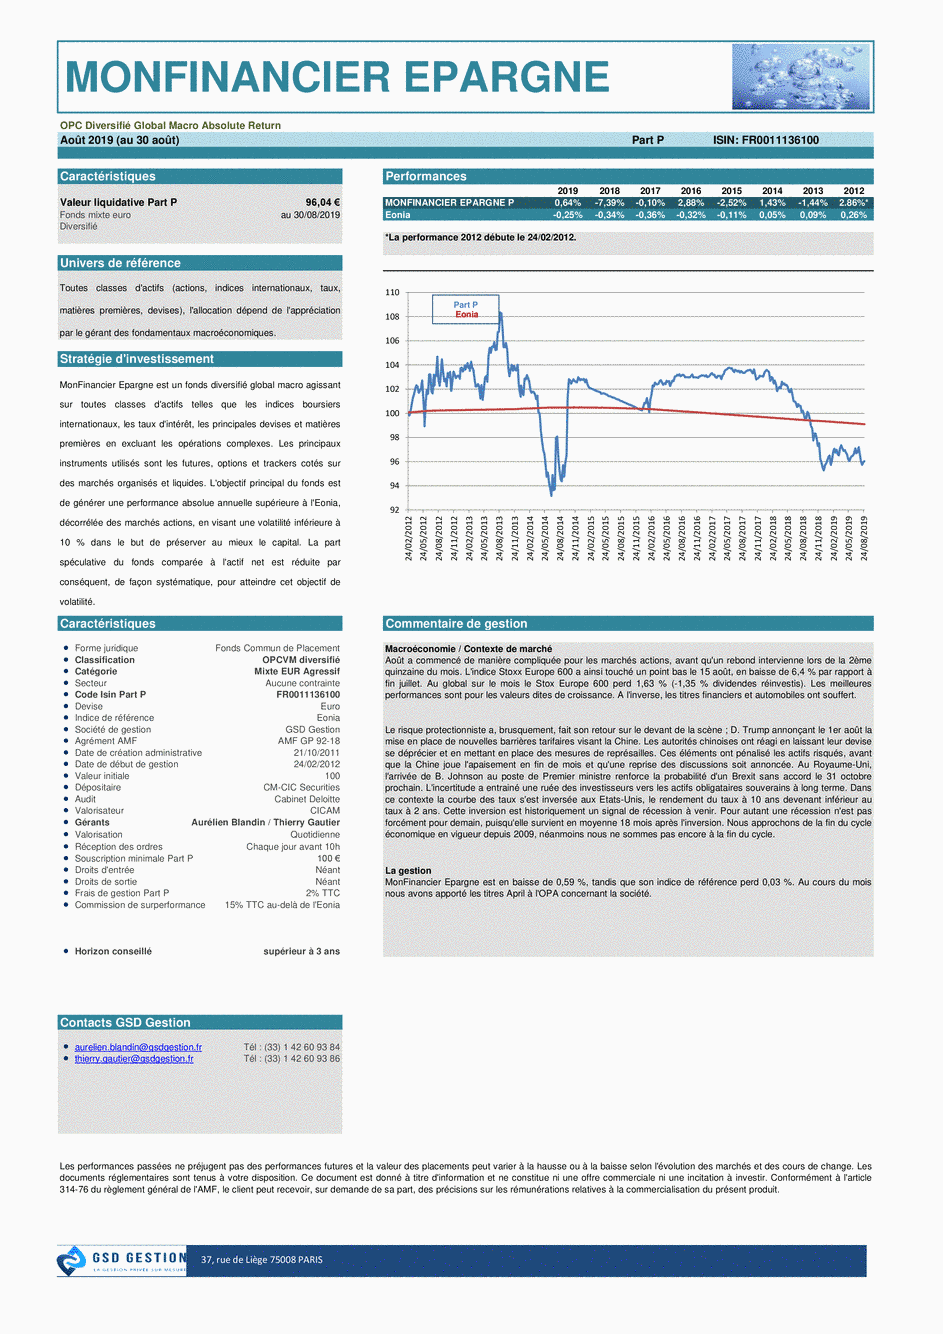 Reporting Monfinancier Epargne P - 03/09/2019 - undefined